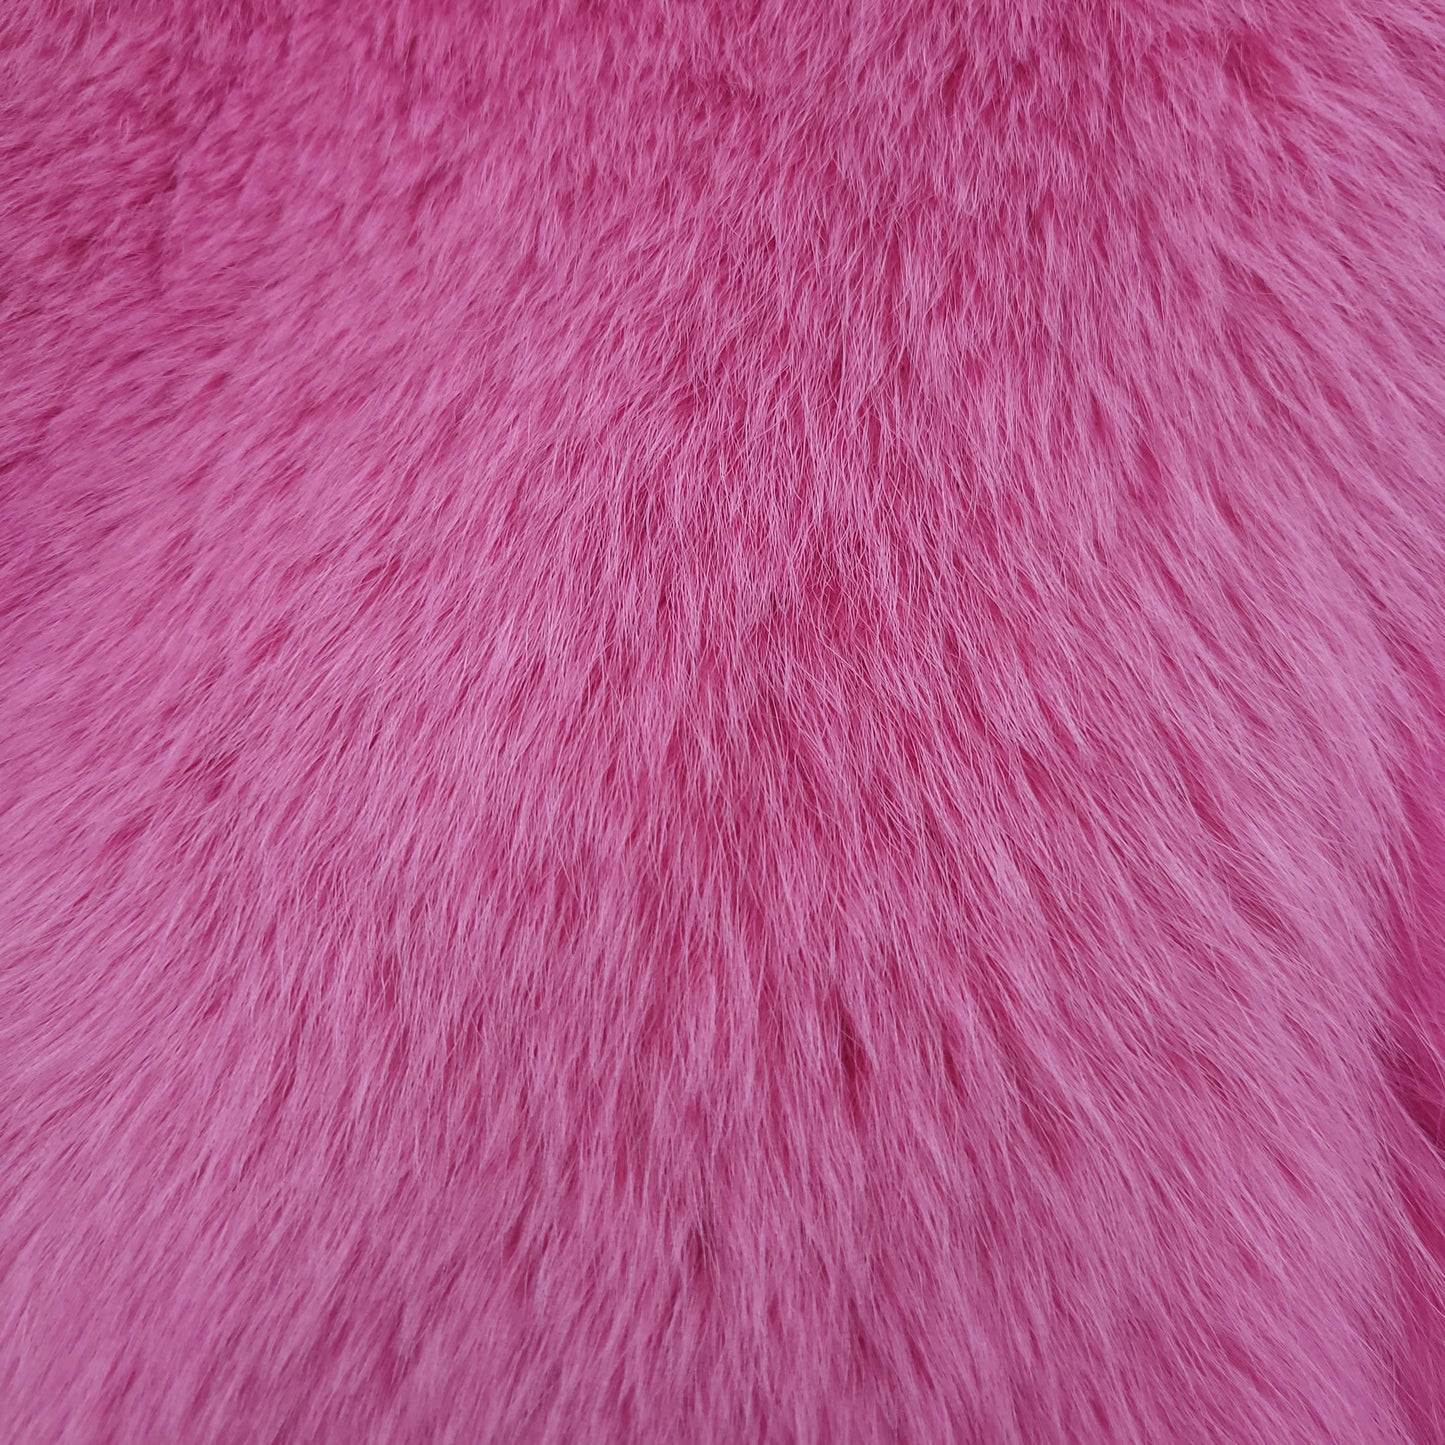 Dyed Shadow Fox Fur - Hot Pink